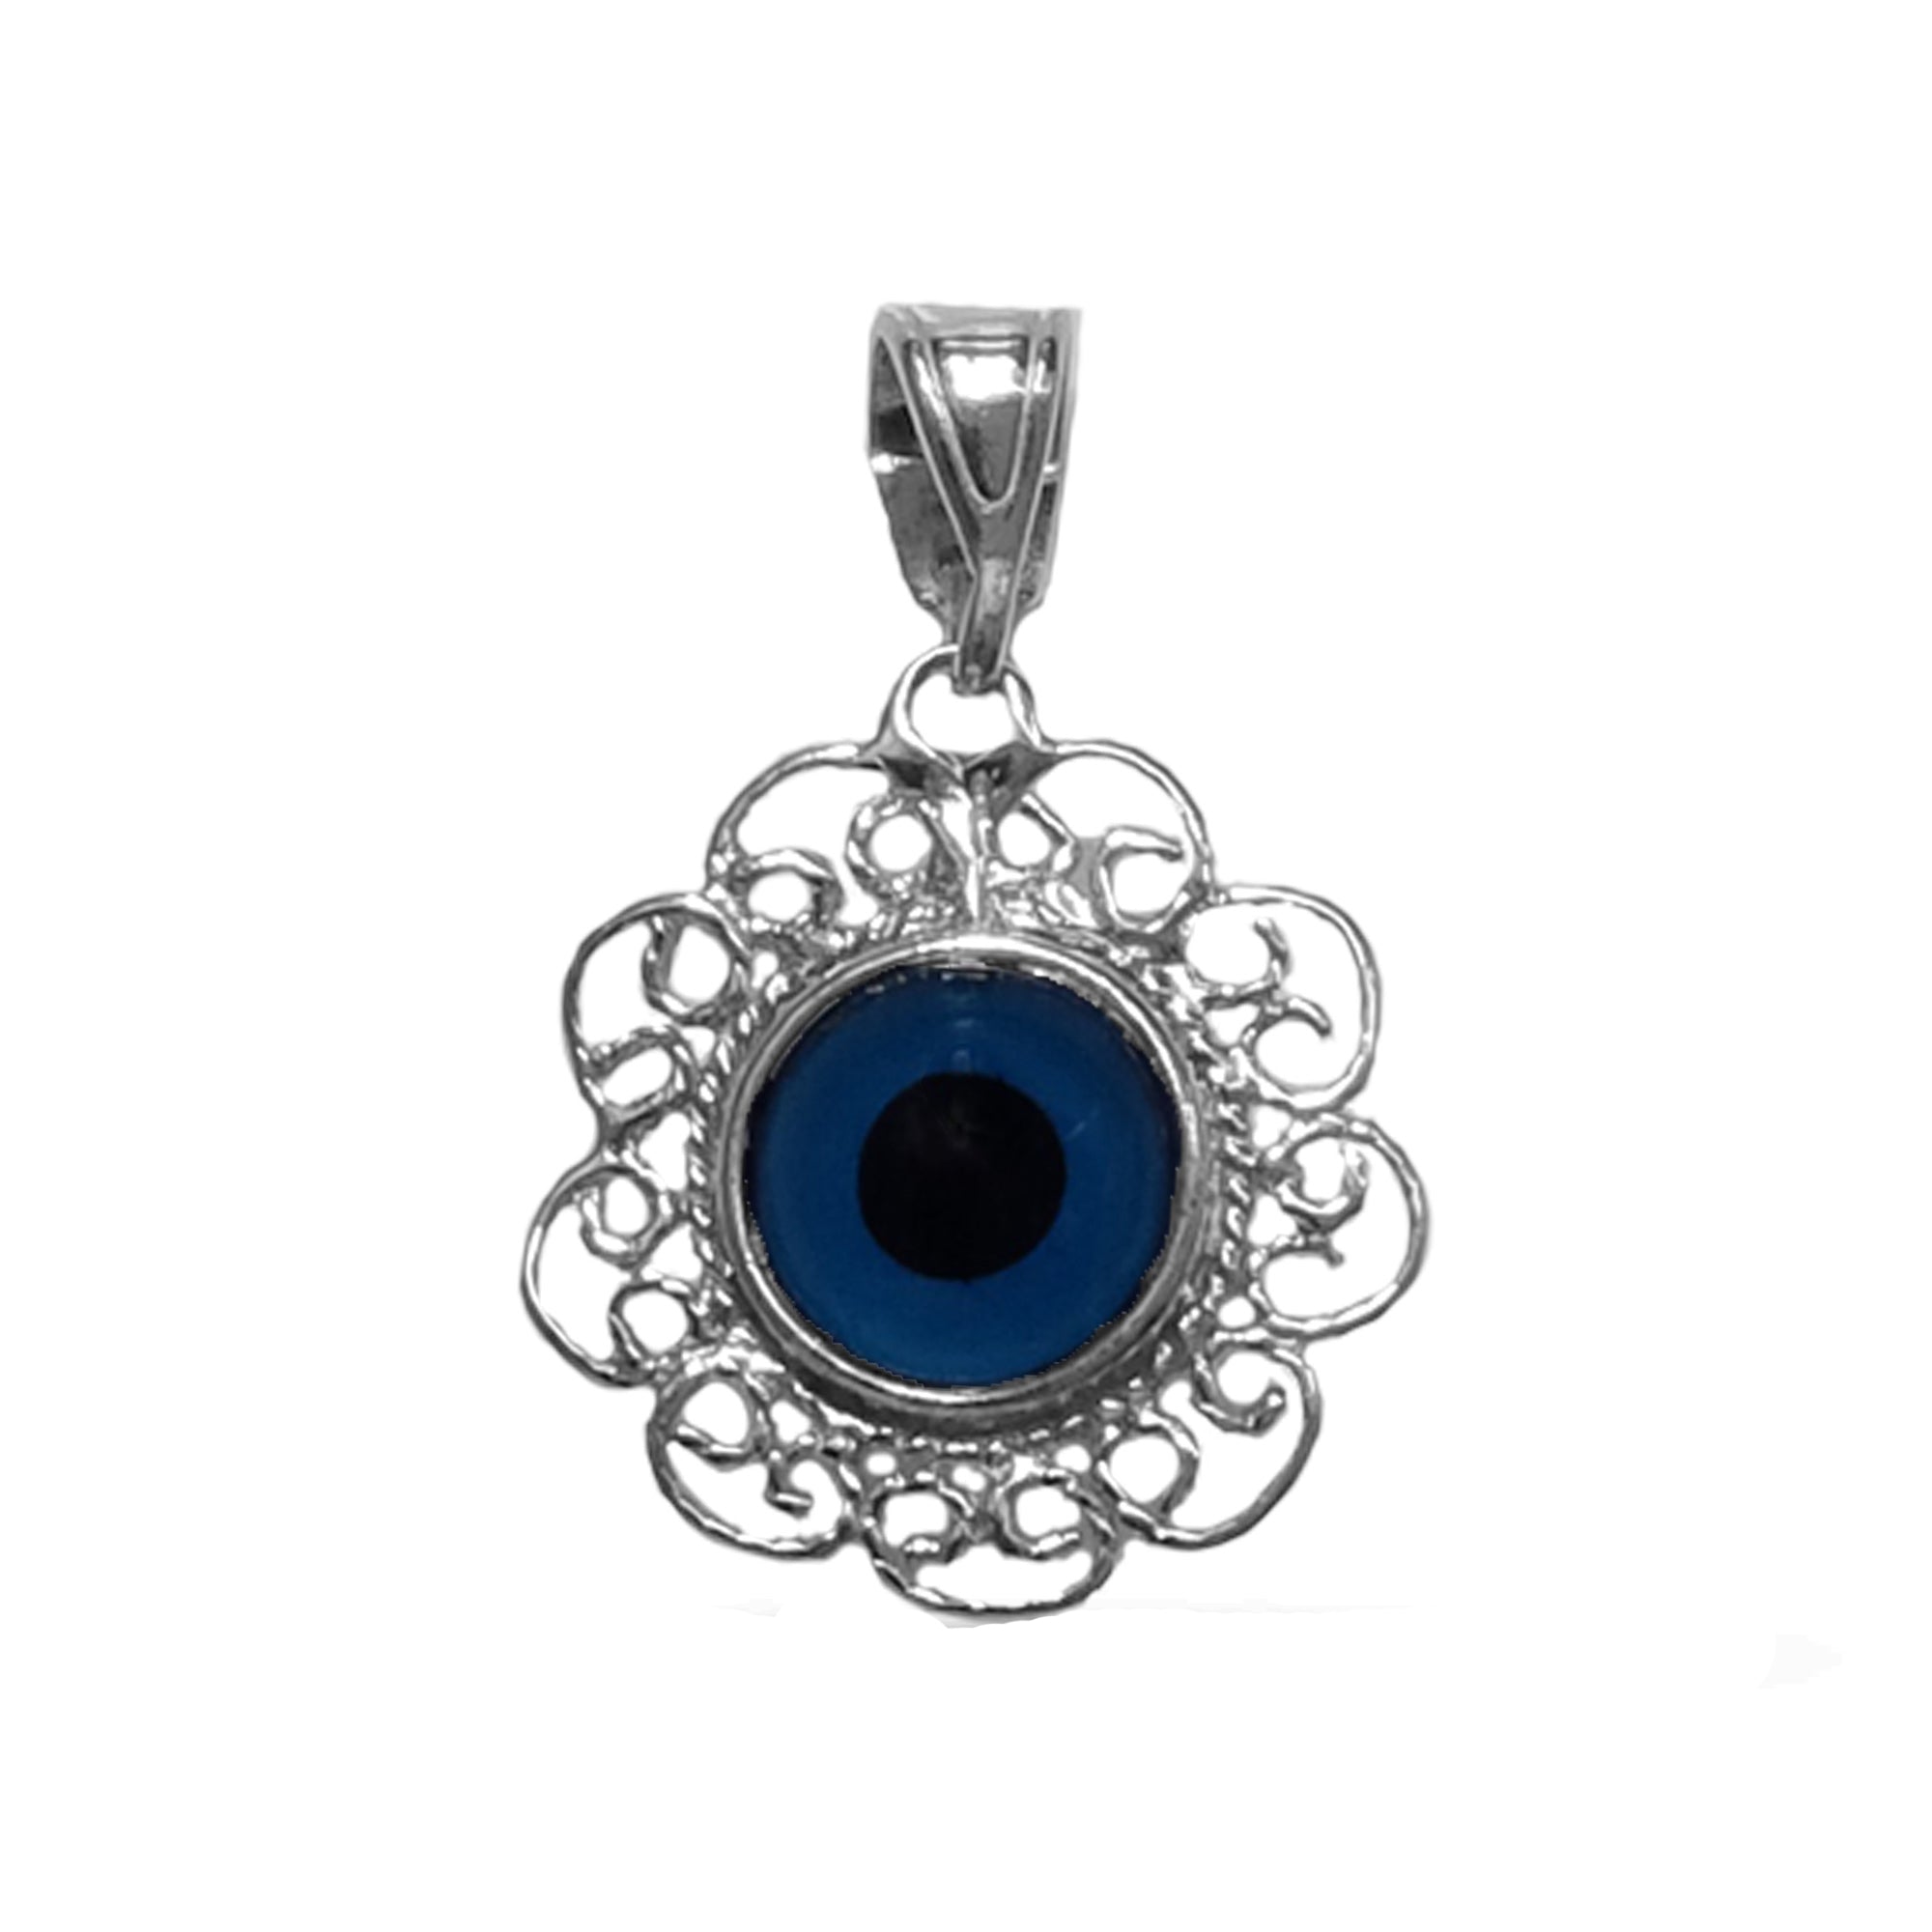 Sterling Silver Filigree Double Sided Evil Eye Pendant Charm fine designer jewelry for men and women